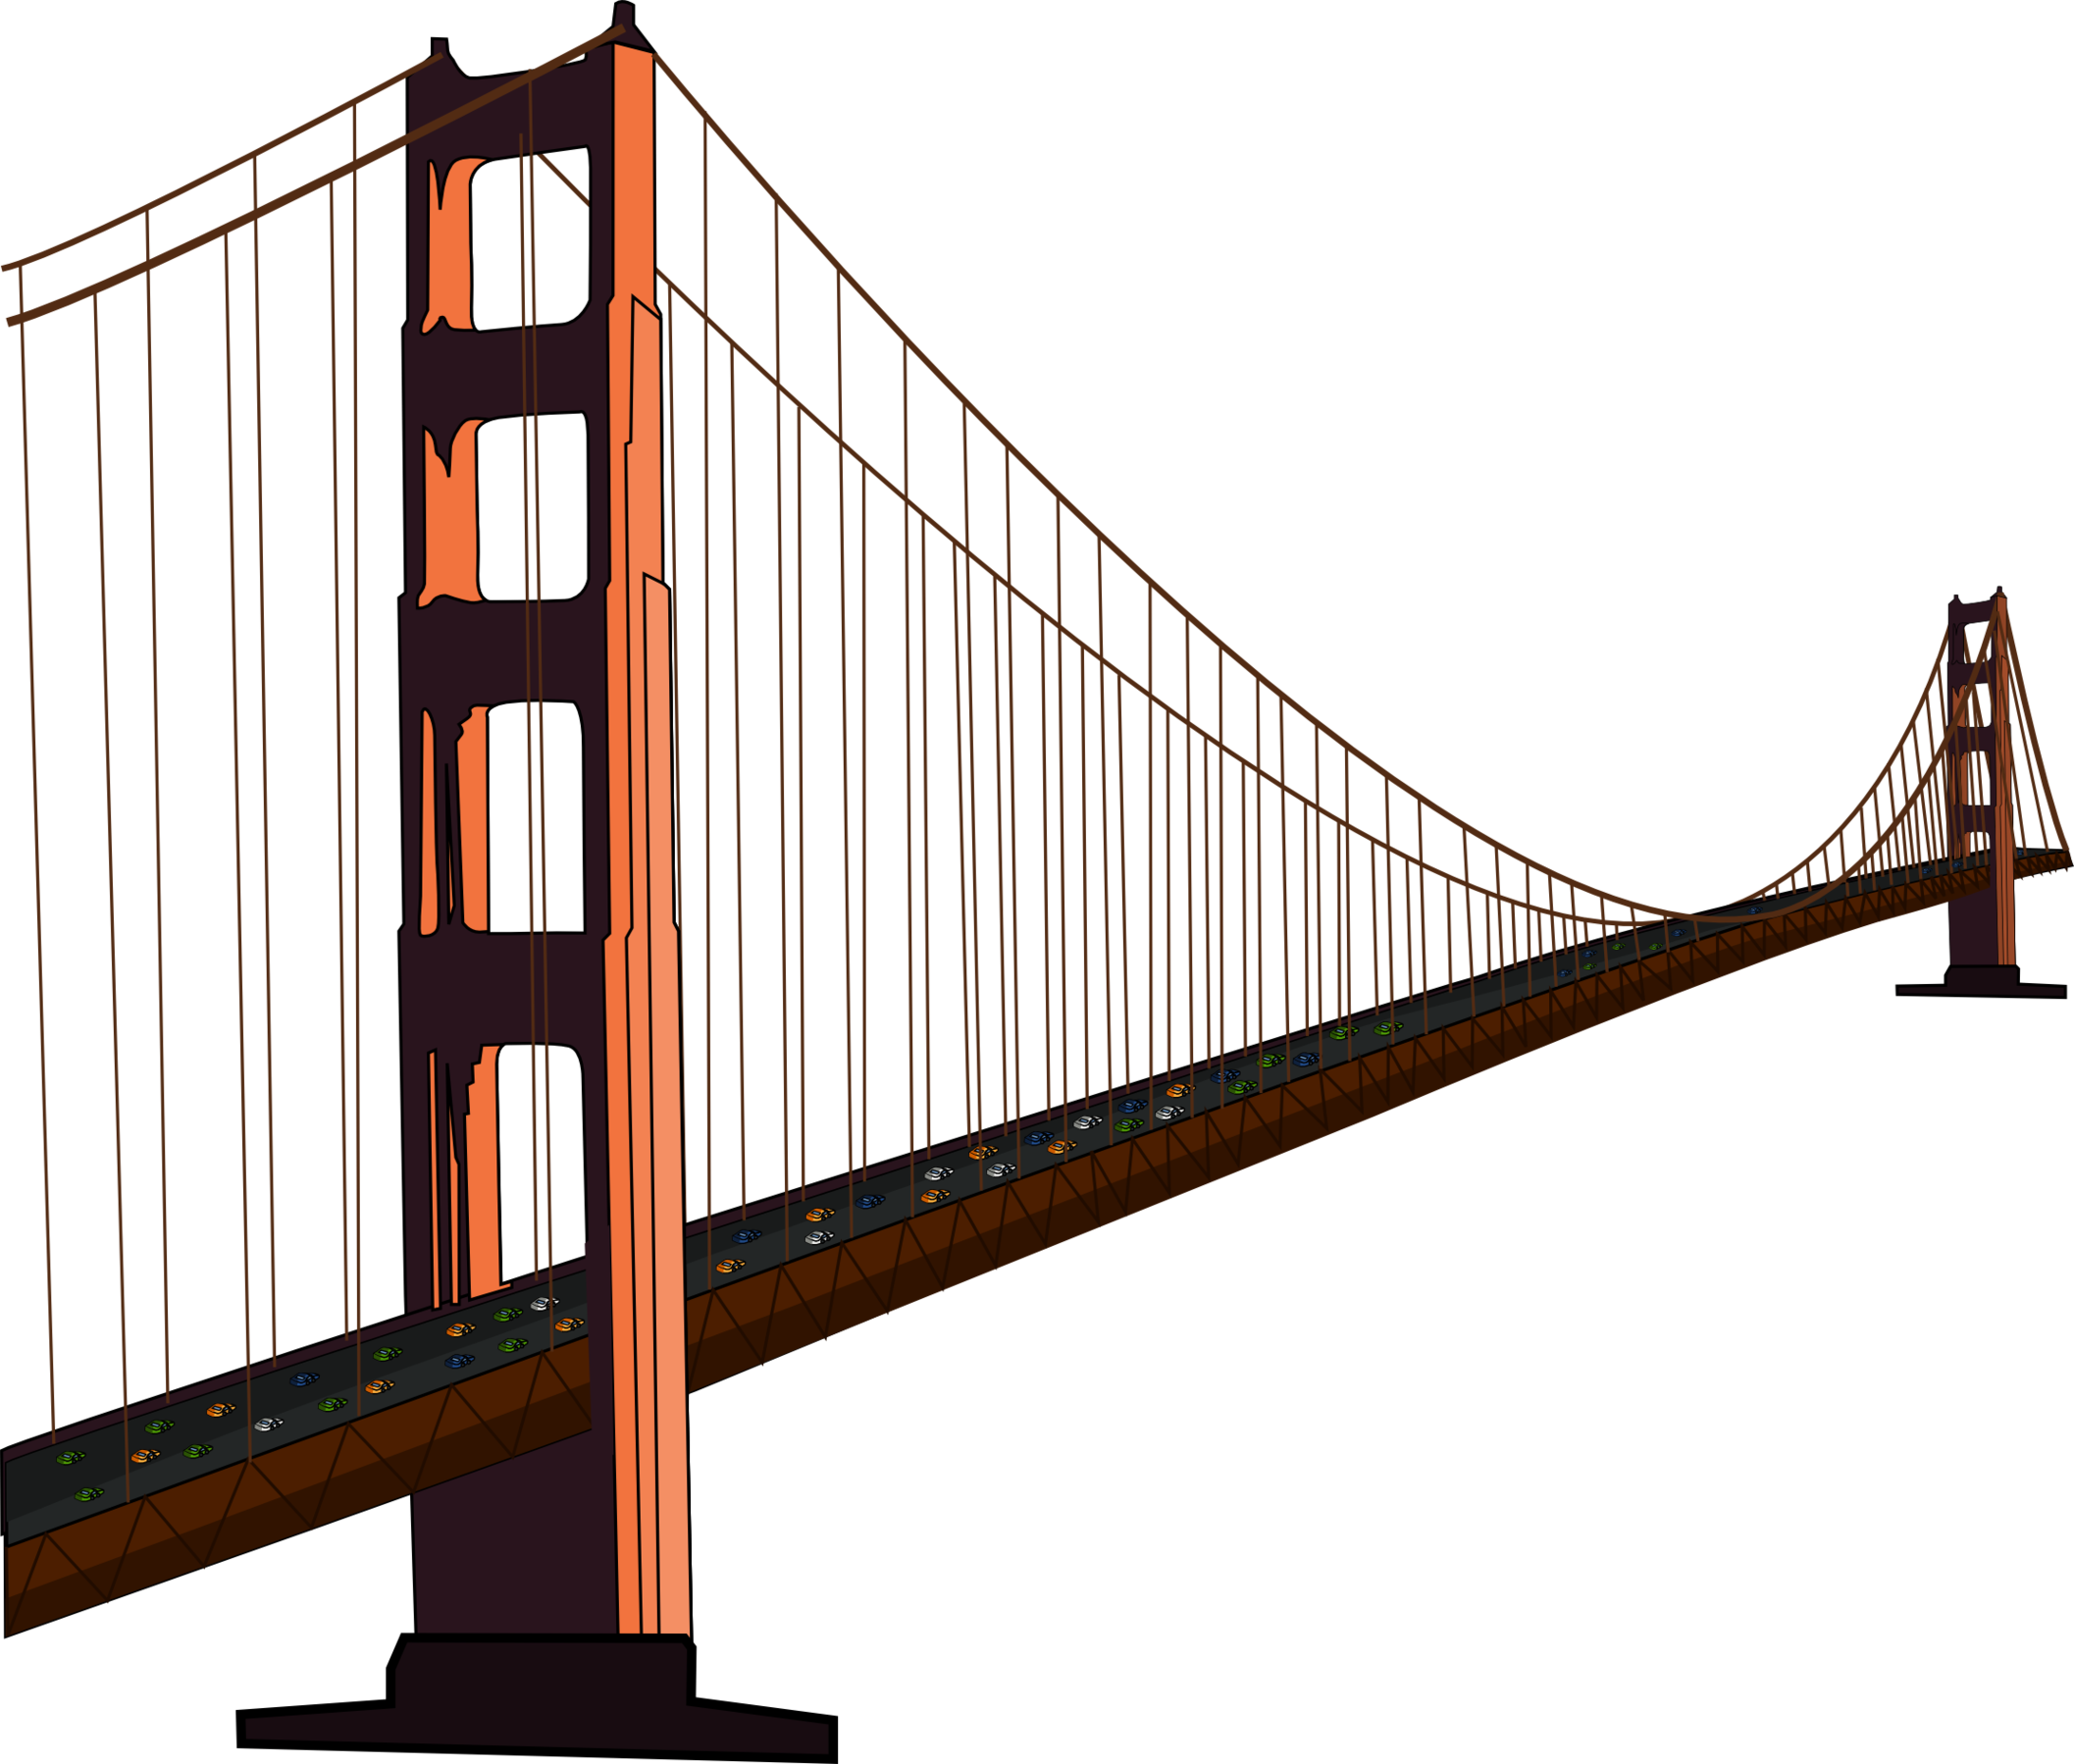 Golden Gate Bridge Drawing - ClipArt Best